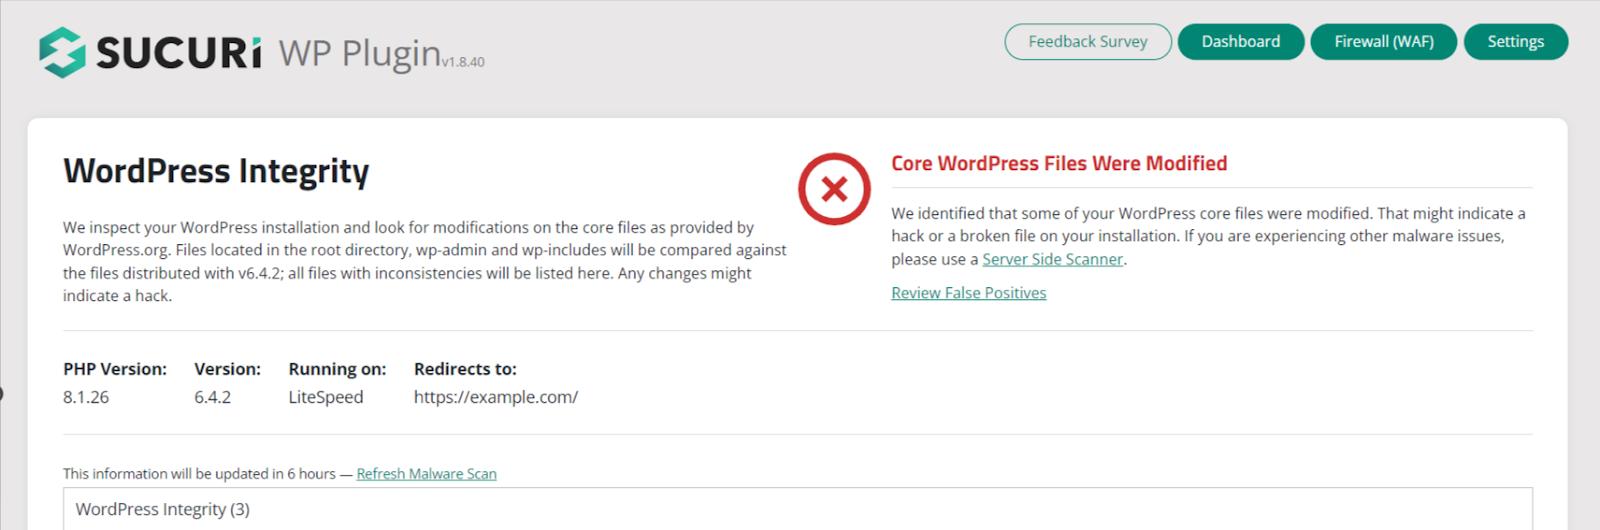 instale o plugin Sucuri para proteger um site WordPress